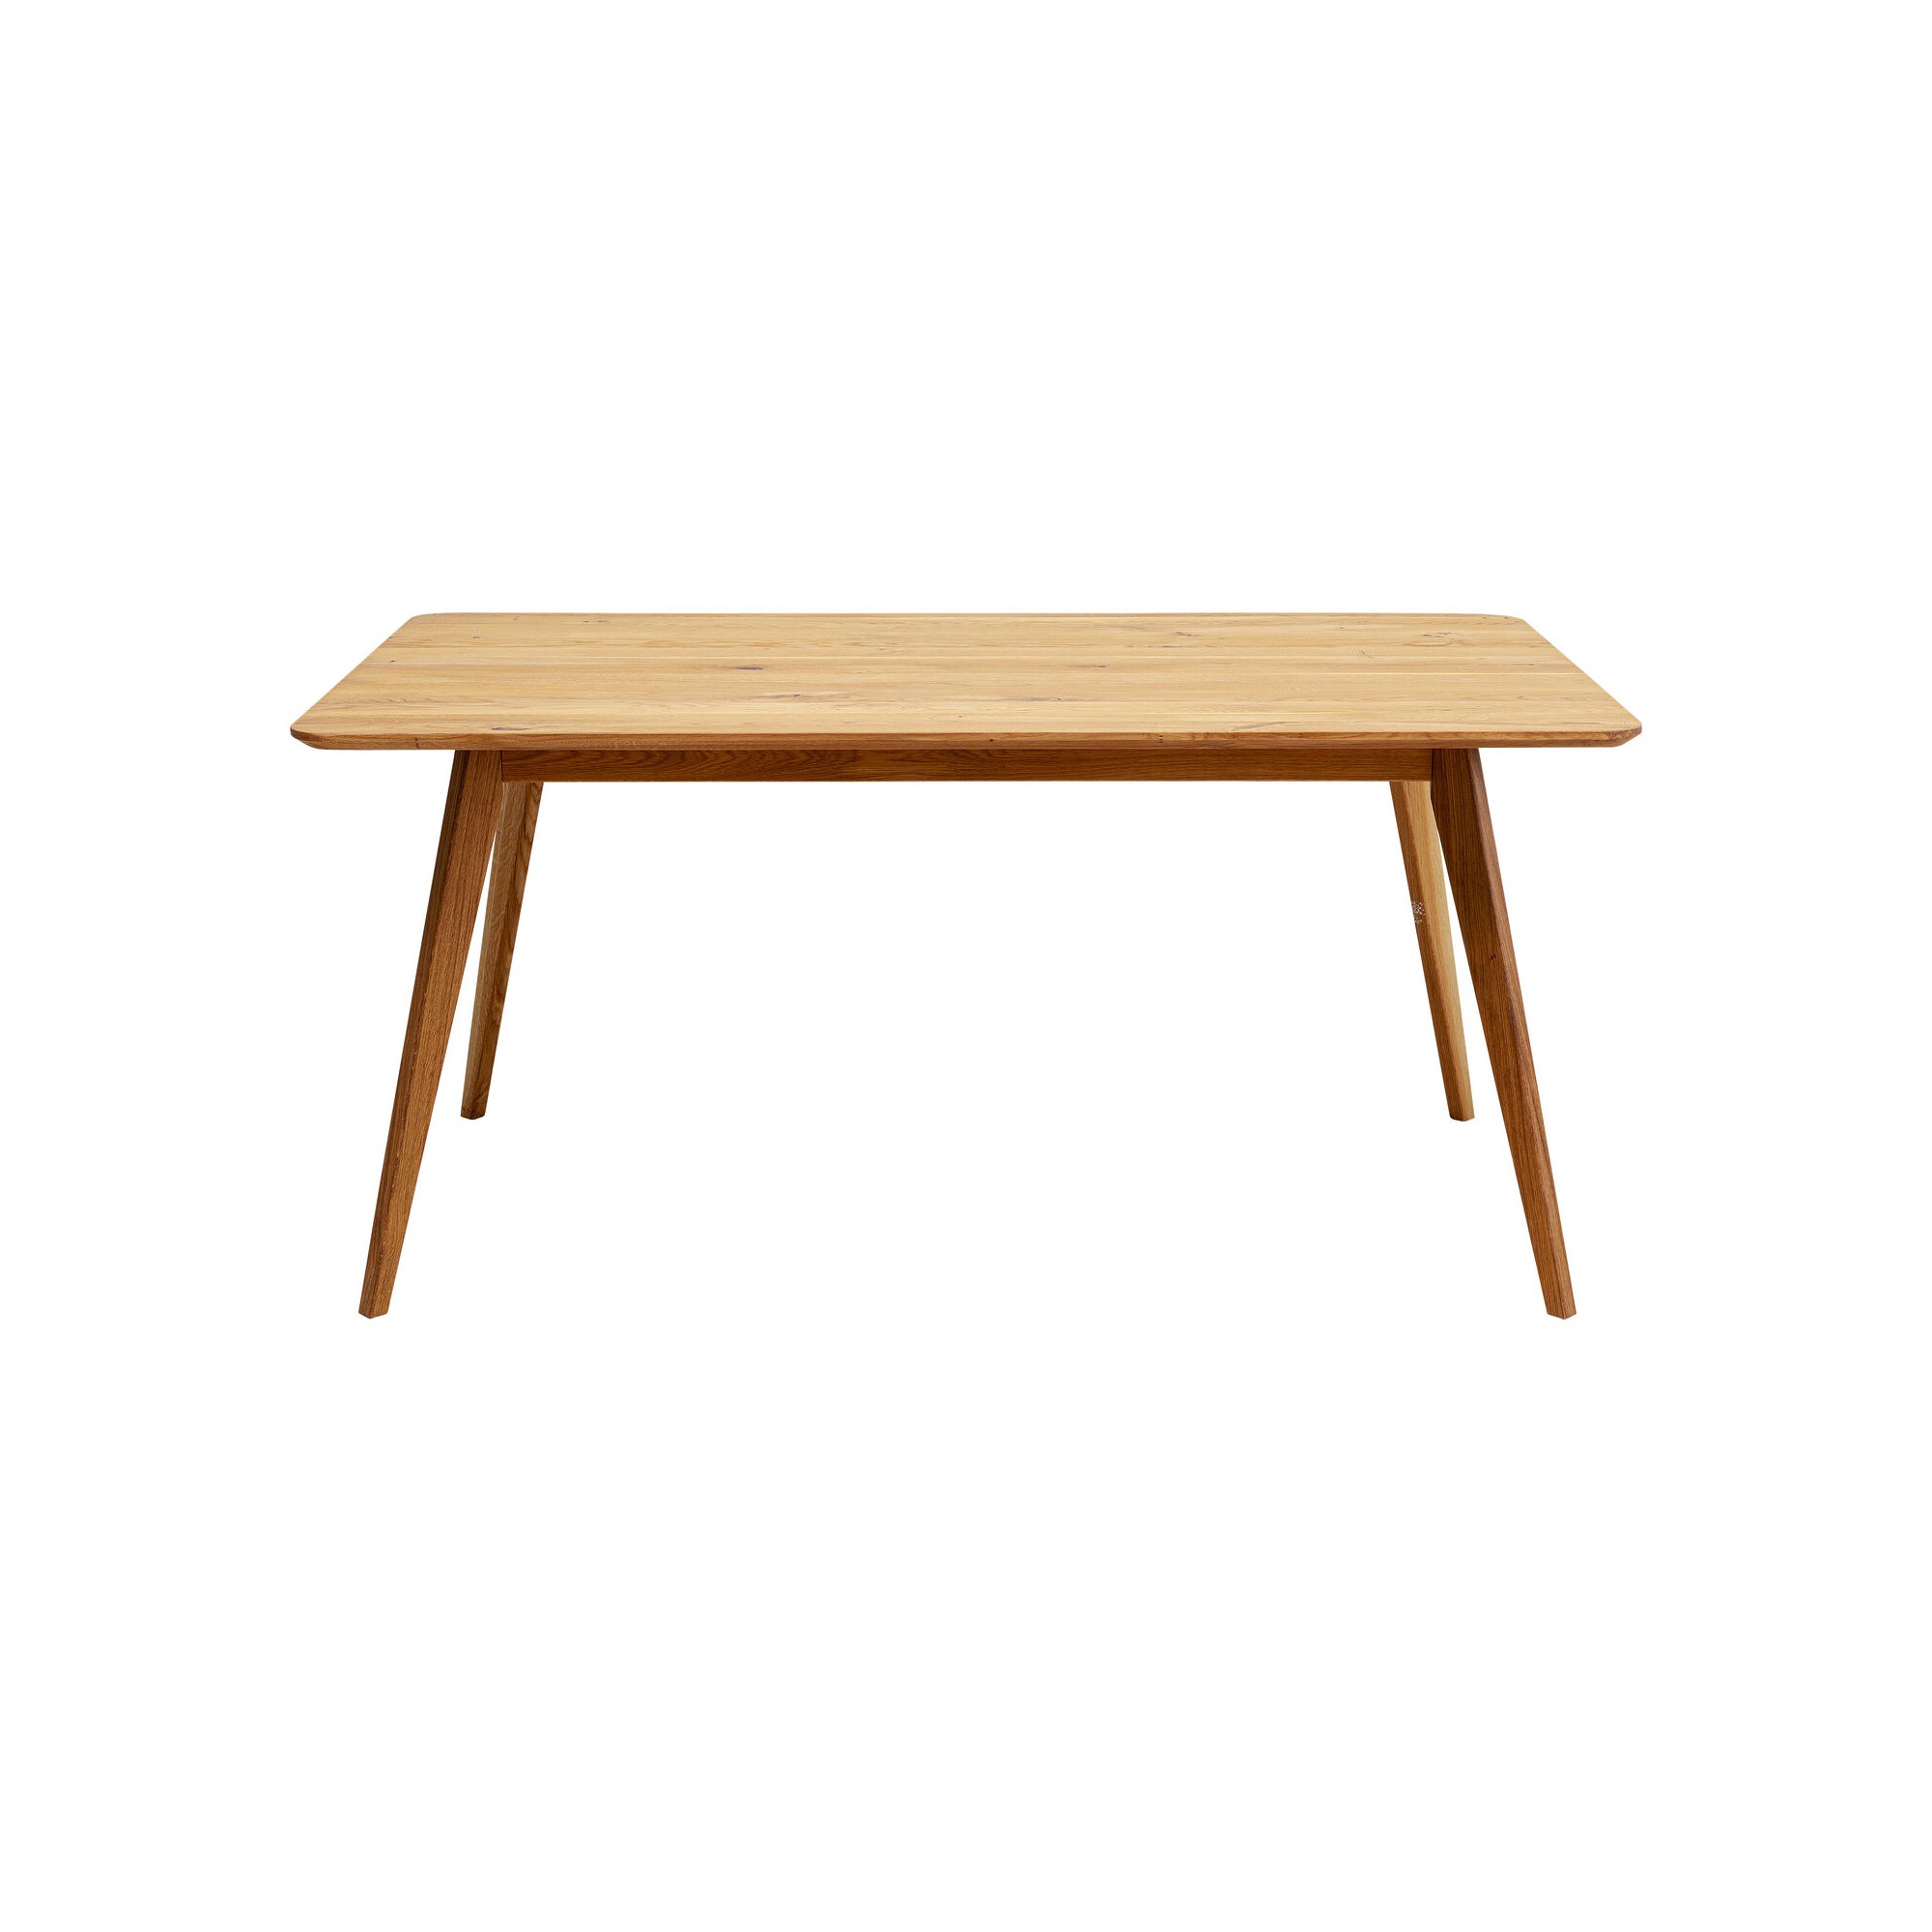 Table Memo 160x90cm